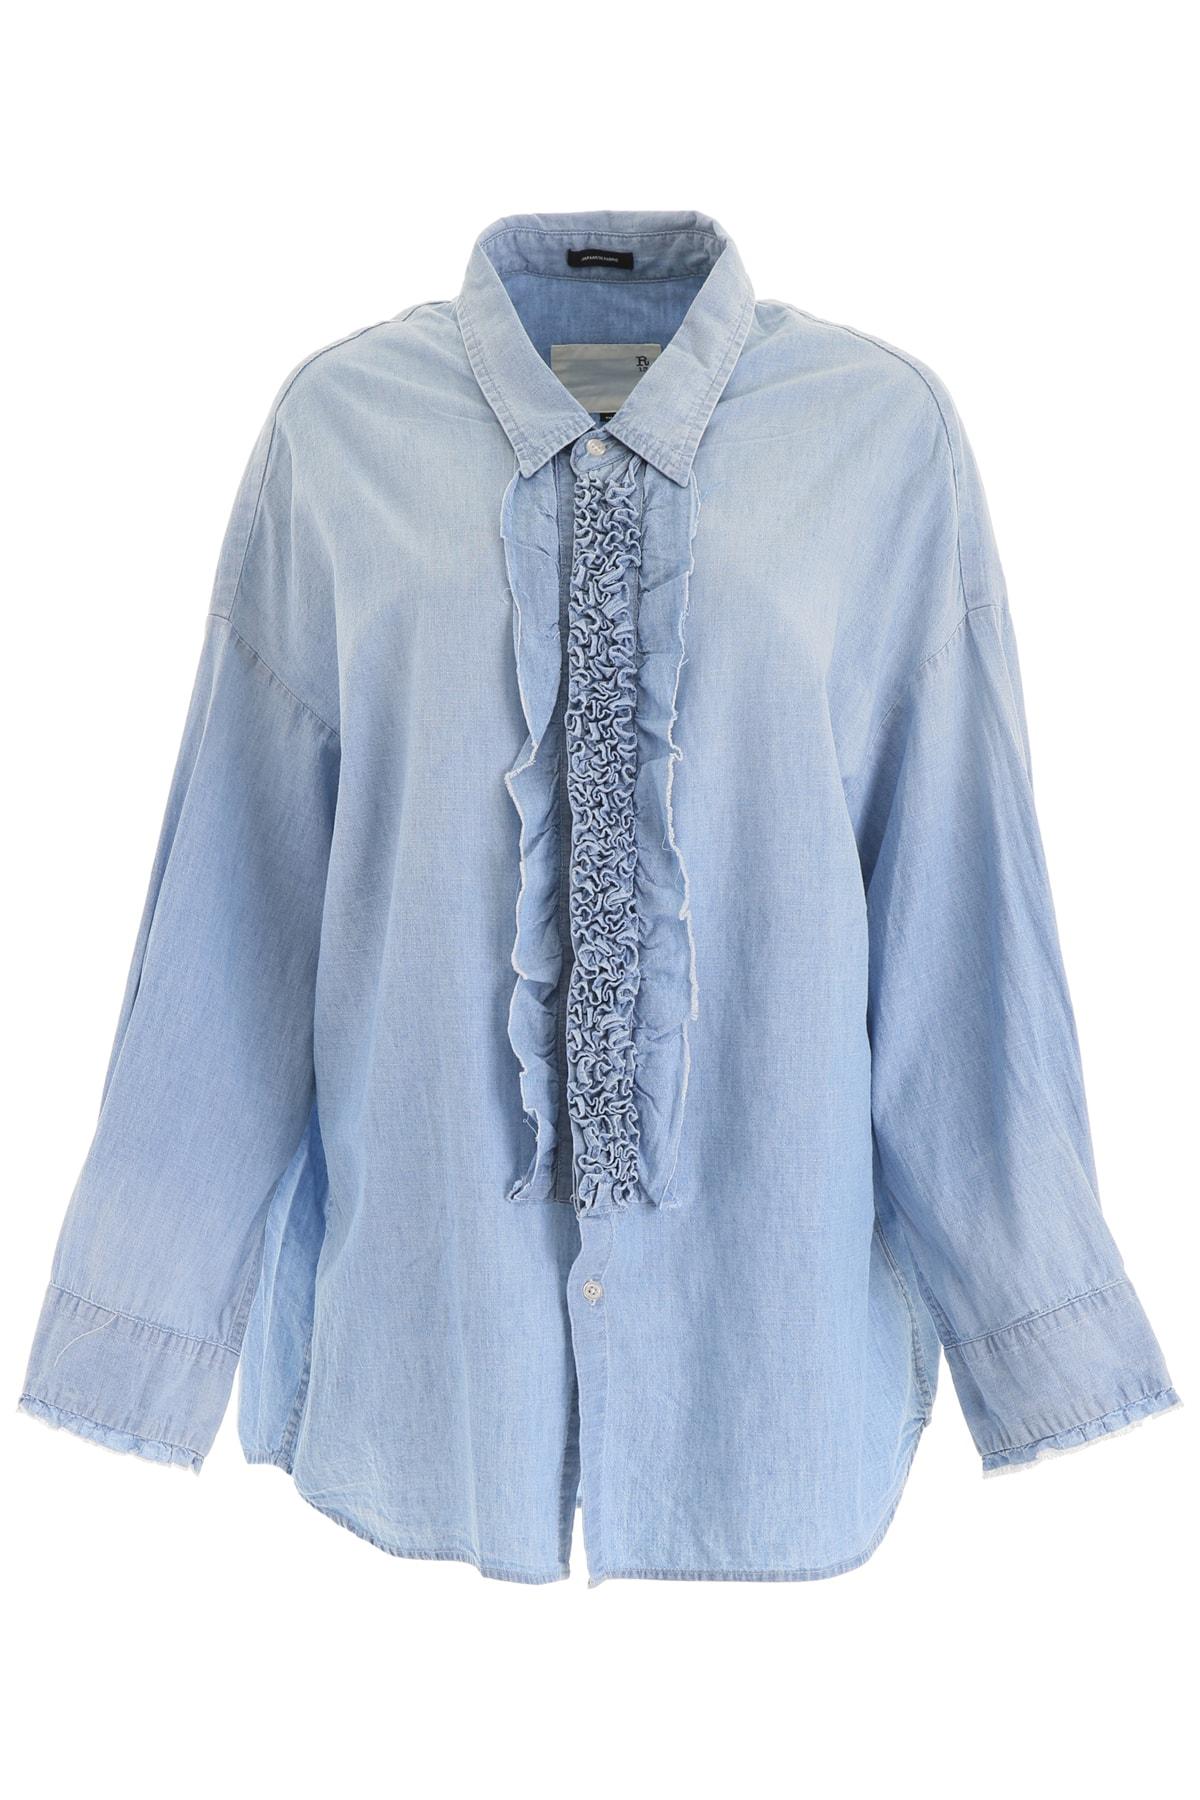 R13 Satin Ruffled Shirt in Light Blue (Blue) - Save 21% - Lyst